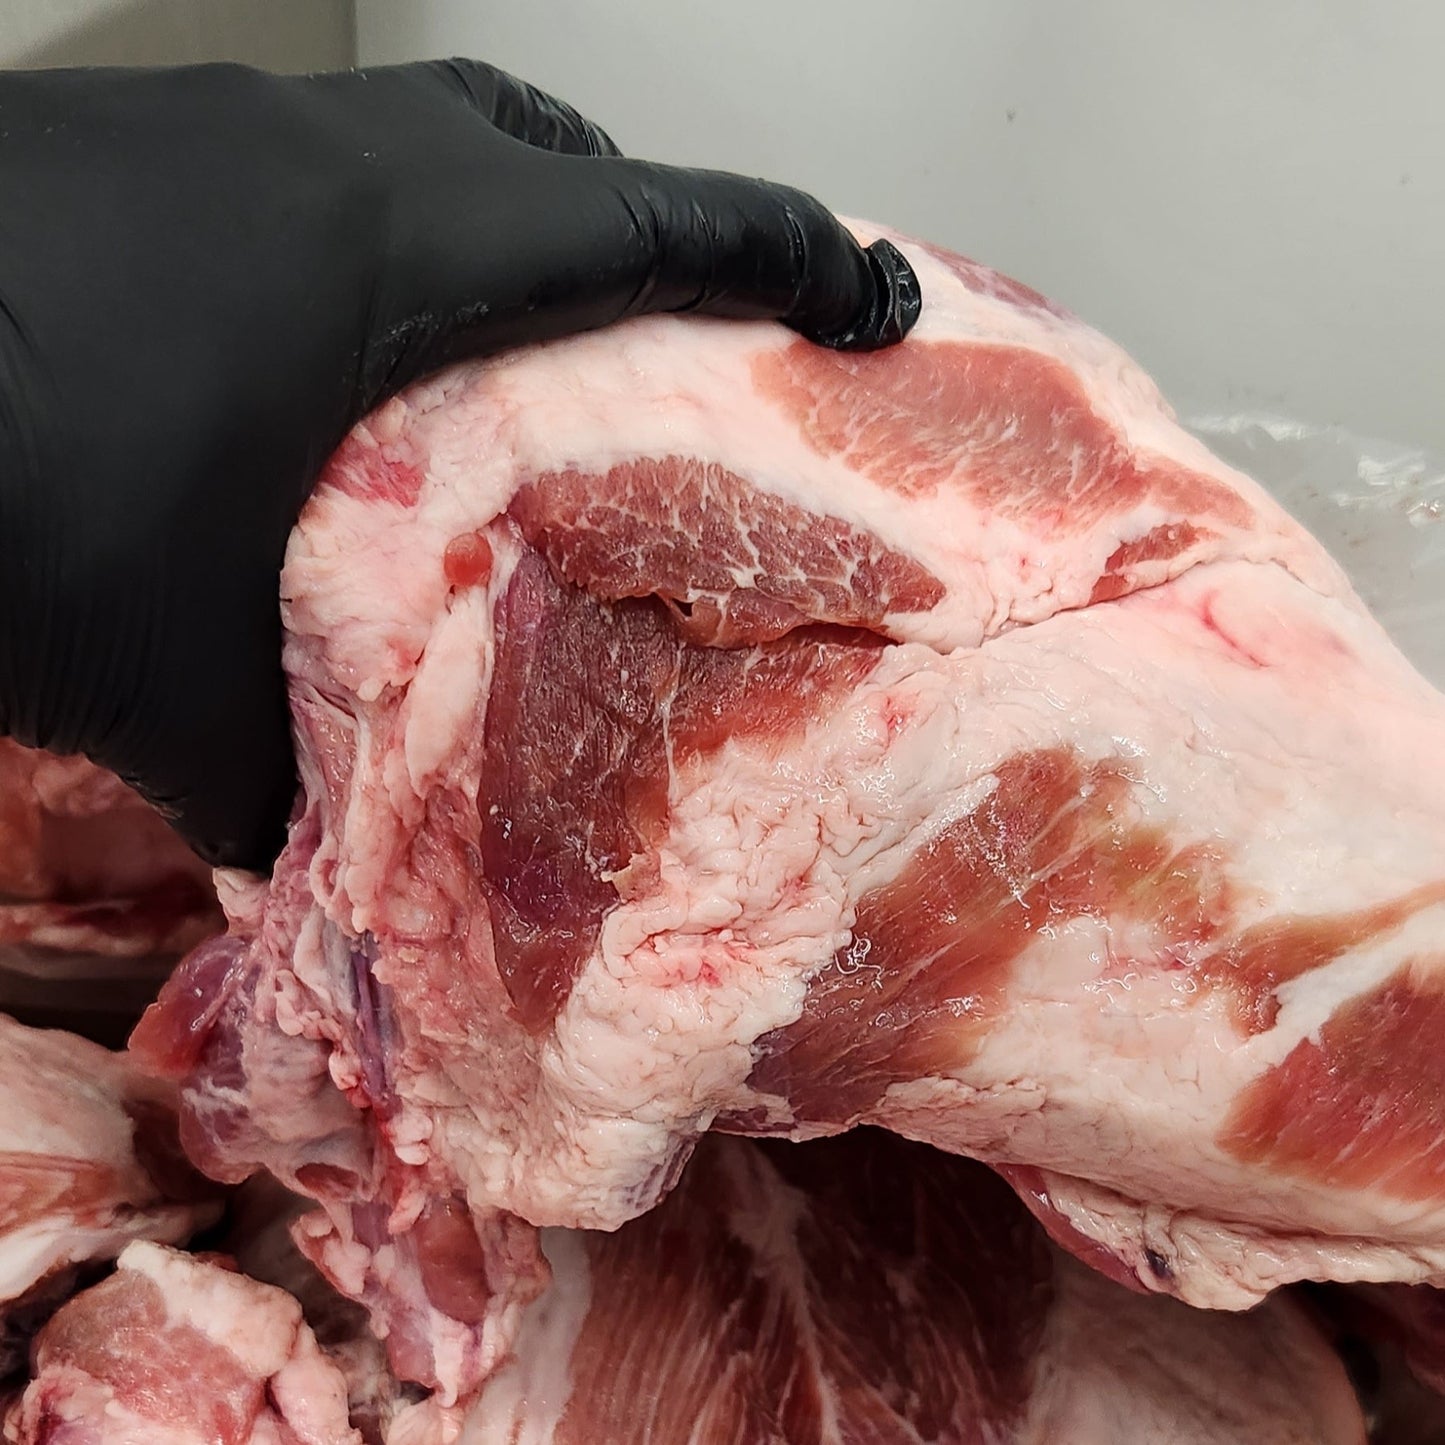 Paleta de Cerdo con Hueso 4.5kg ($4.990 x kg)